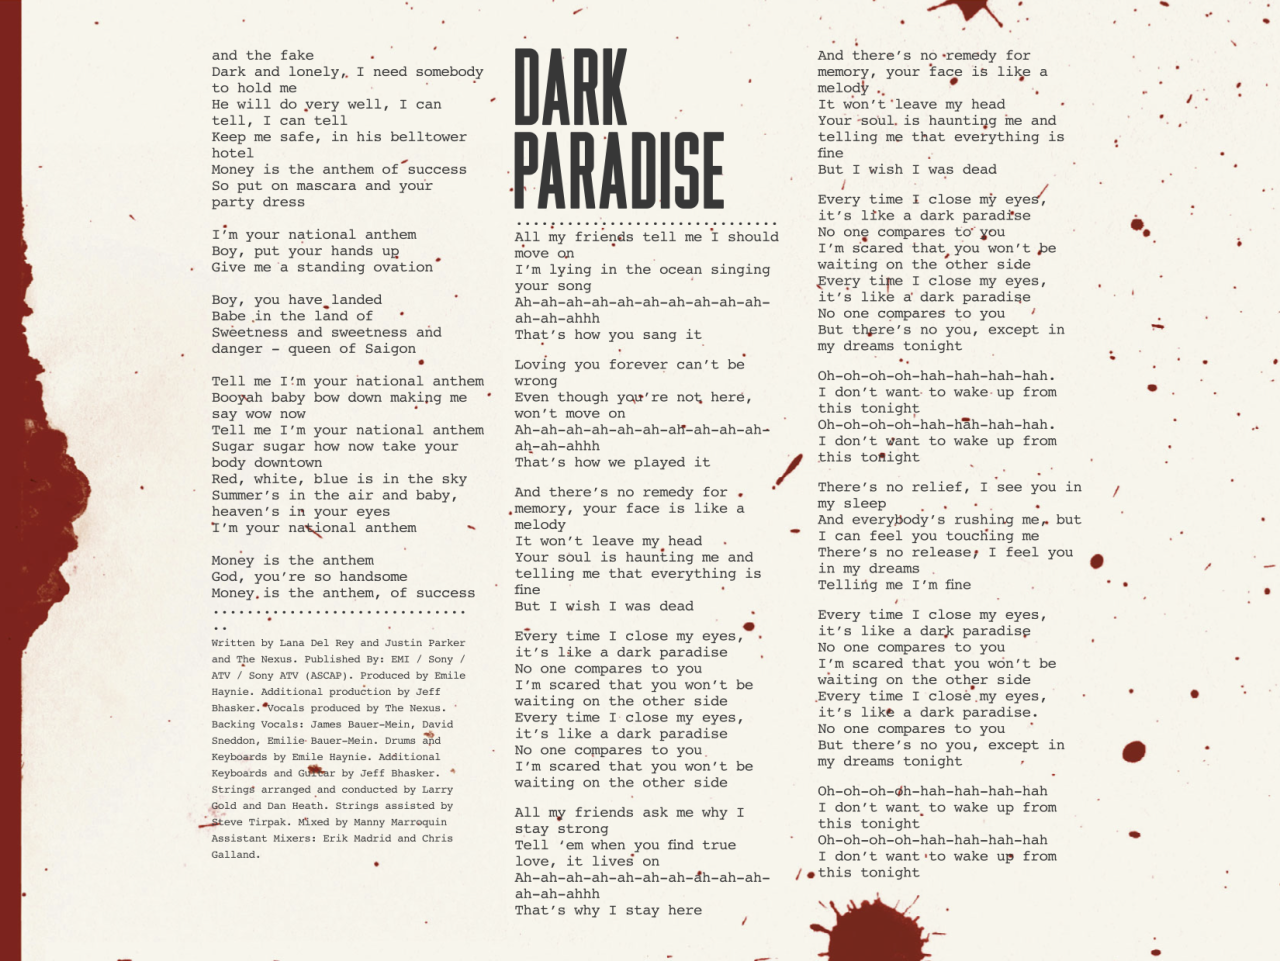 Dark Paradise (Tradução em Português) – Lana Del Rey